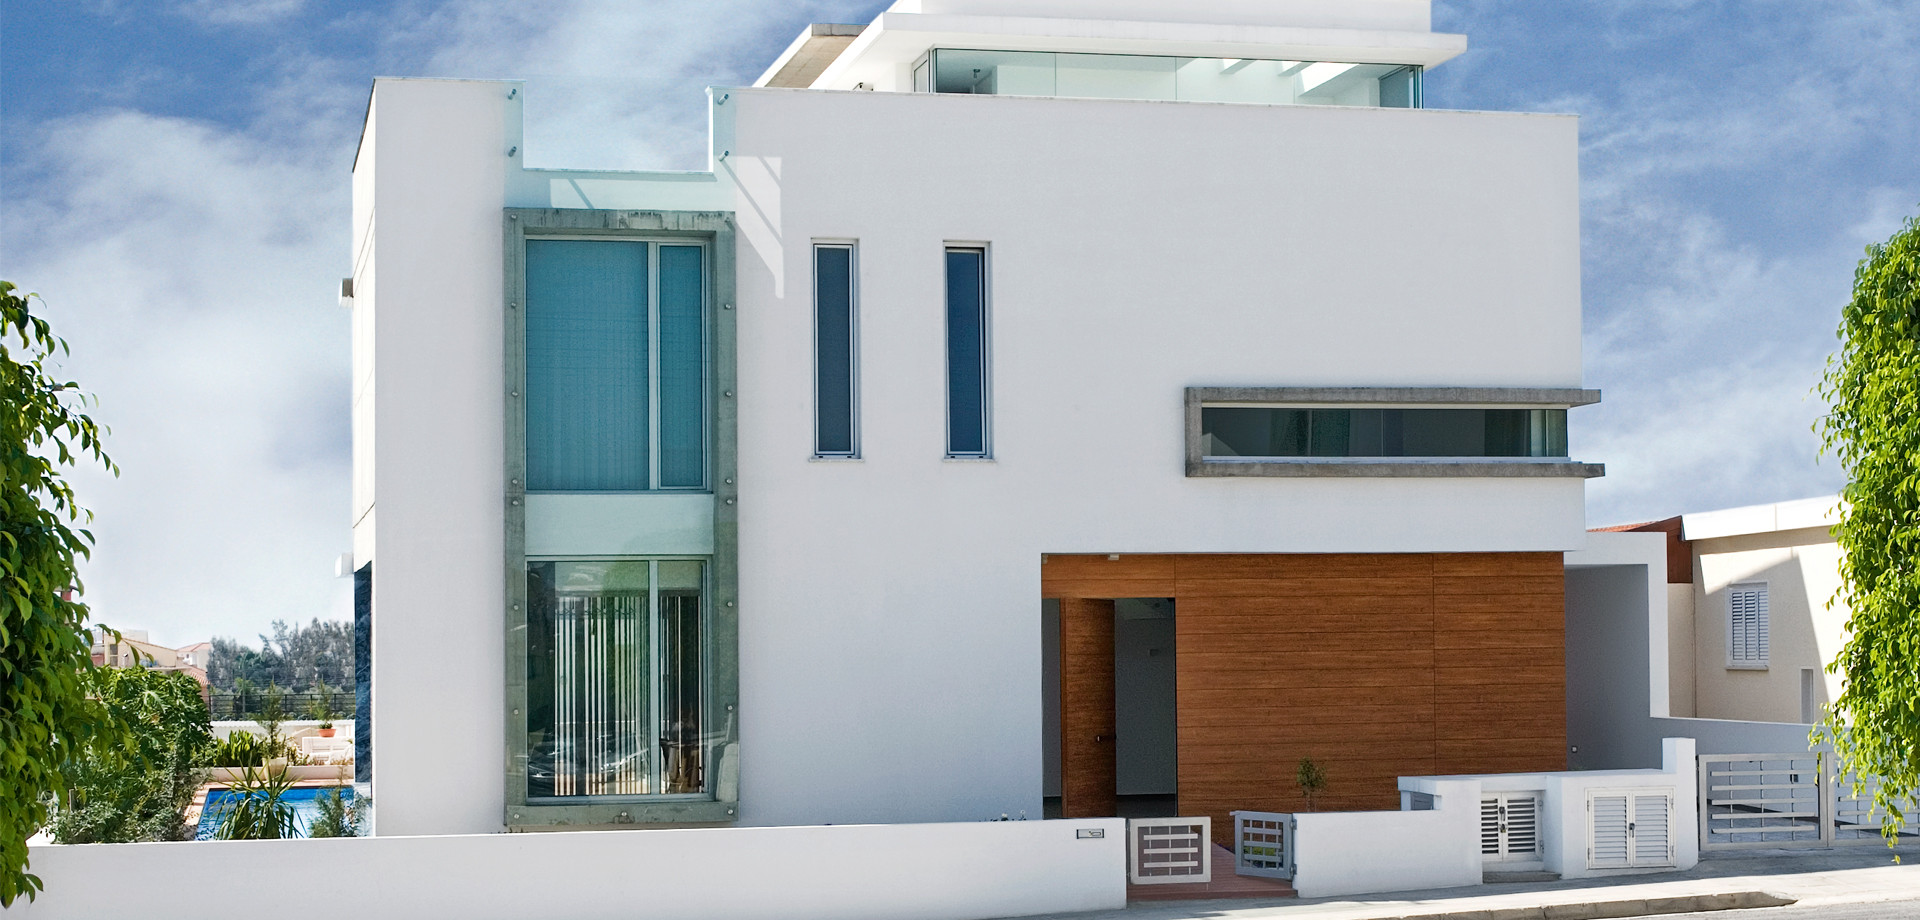 FLUID architecture wins a prestigious European property award